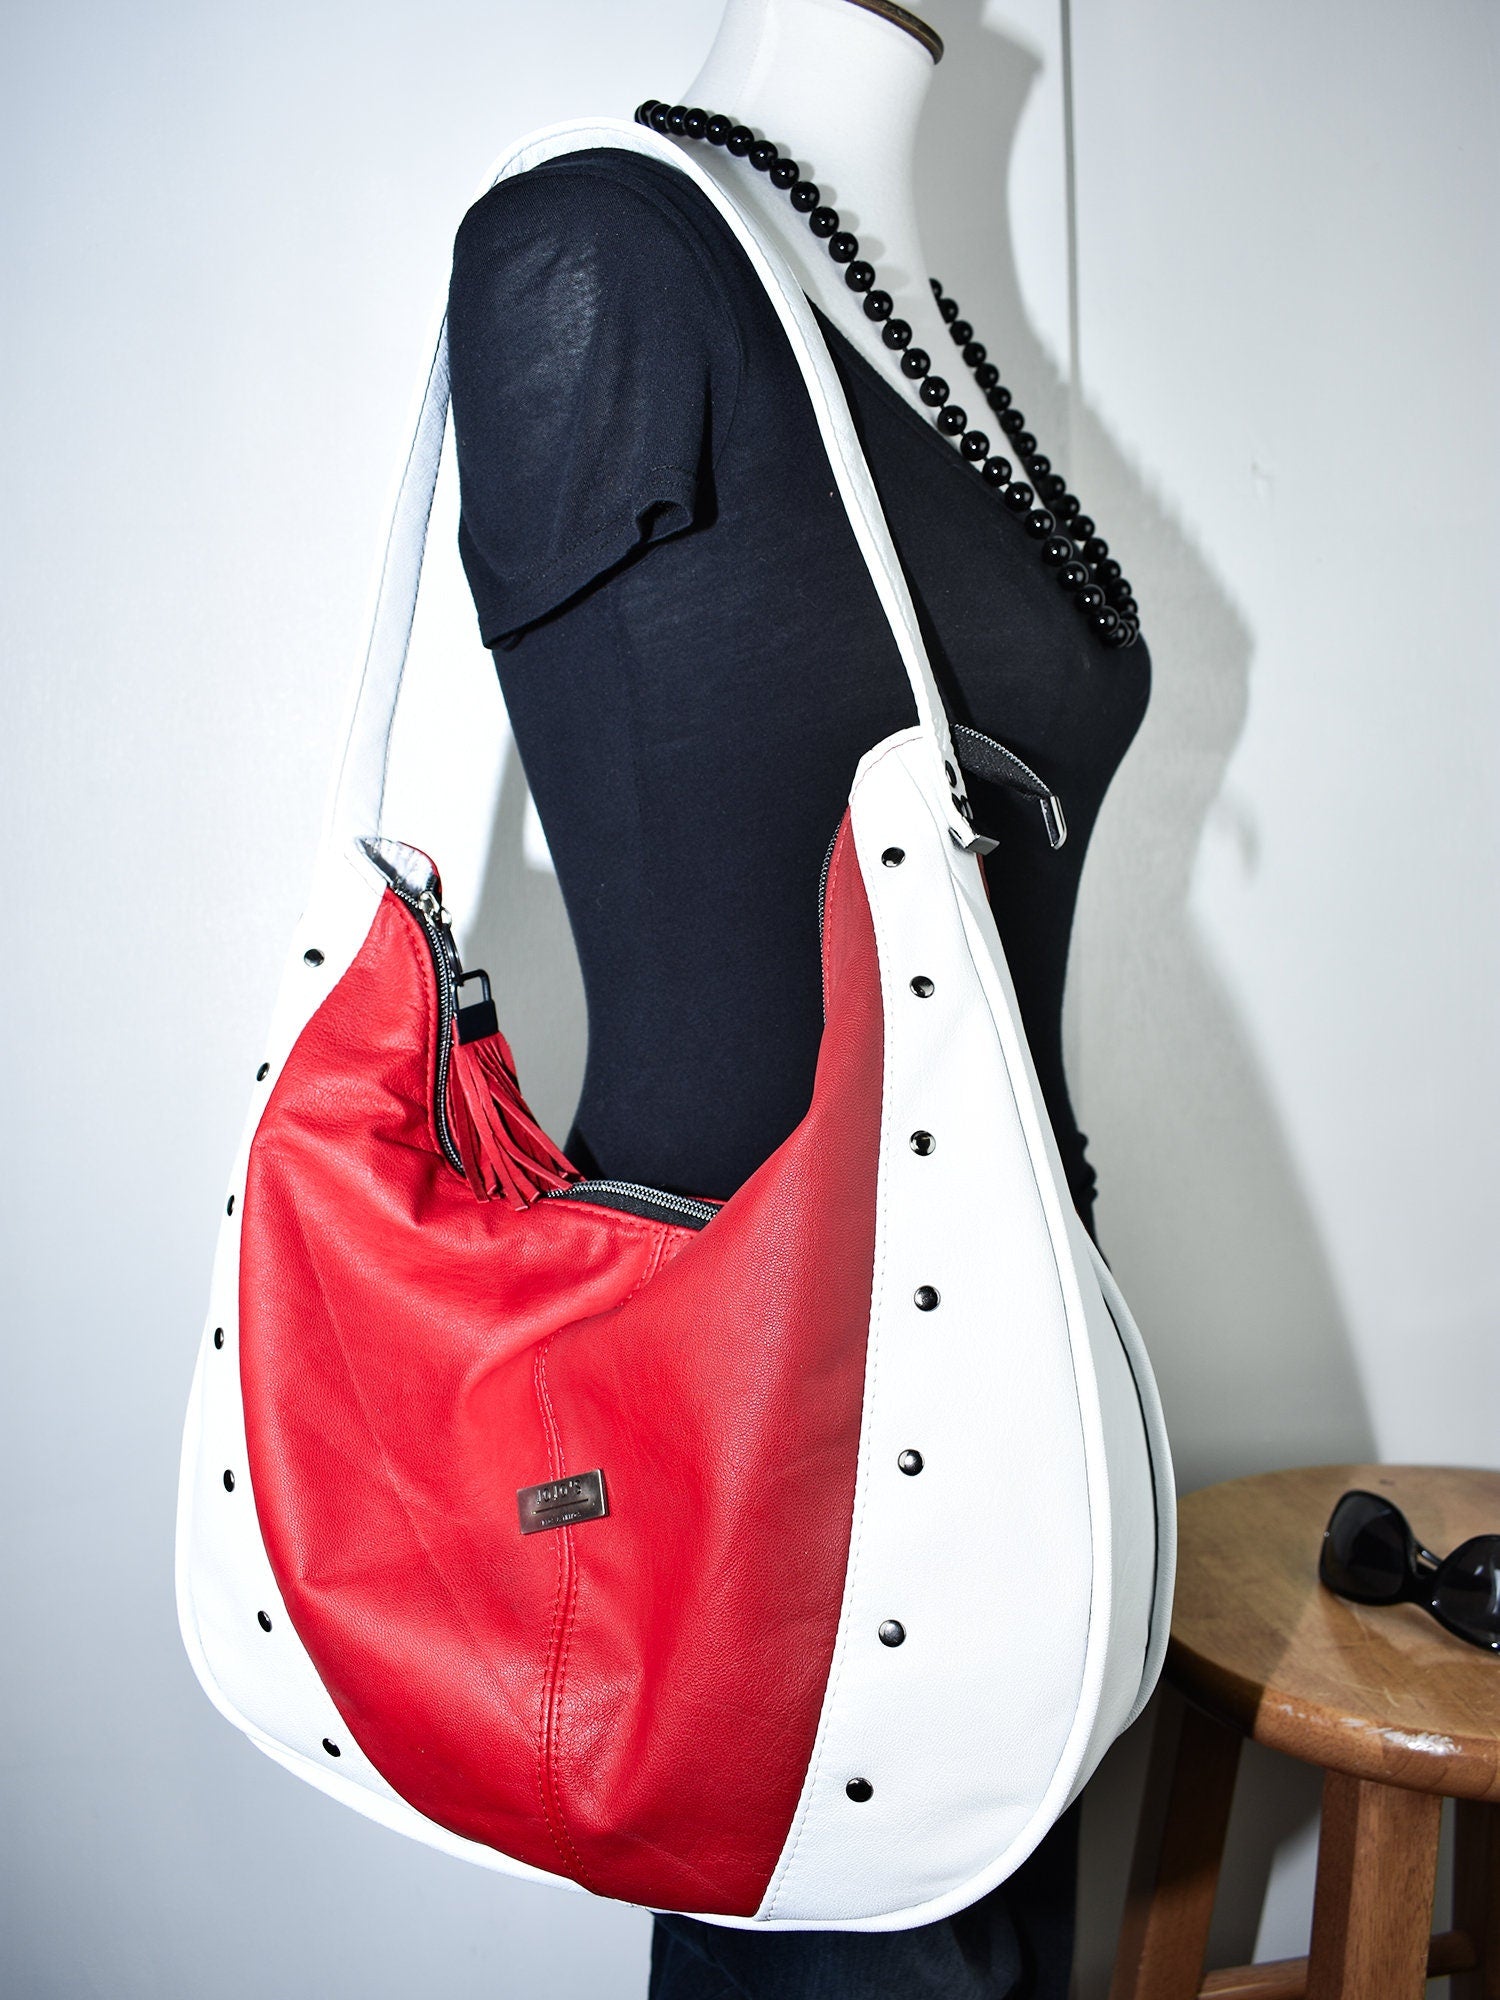 Suzy Vegan Leather Hobo Bag | Convertible Bags | Joy Susan